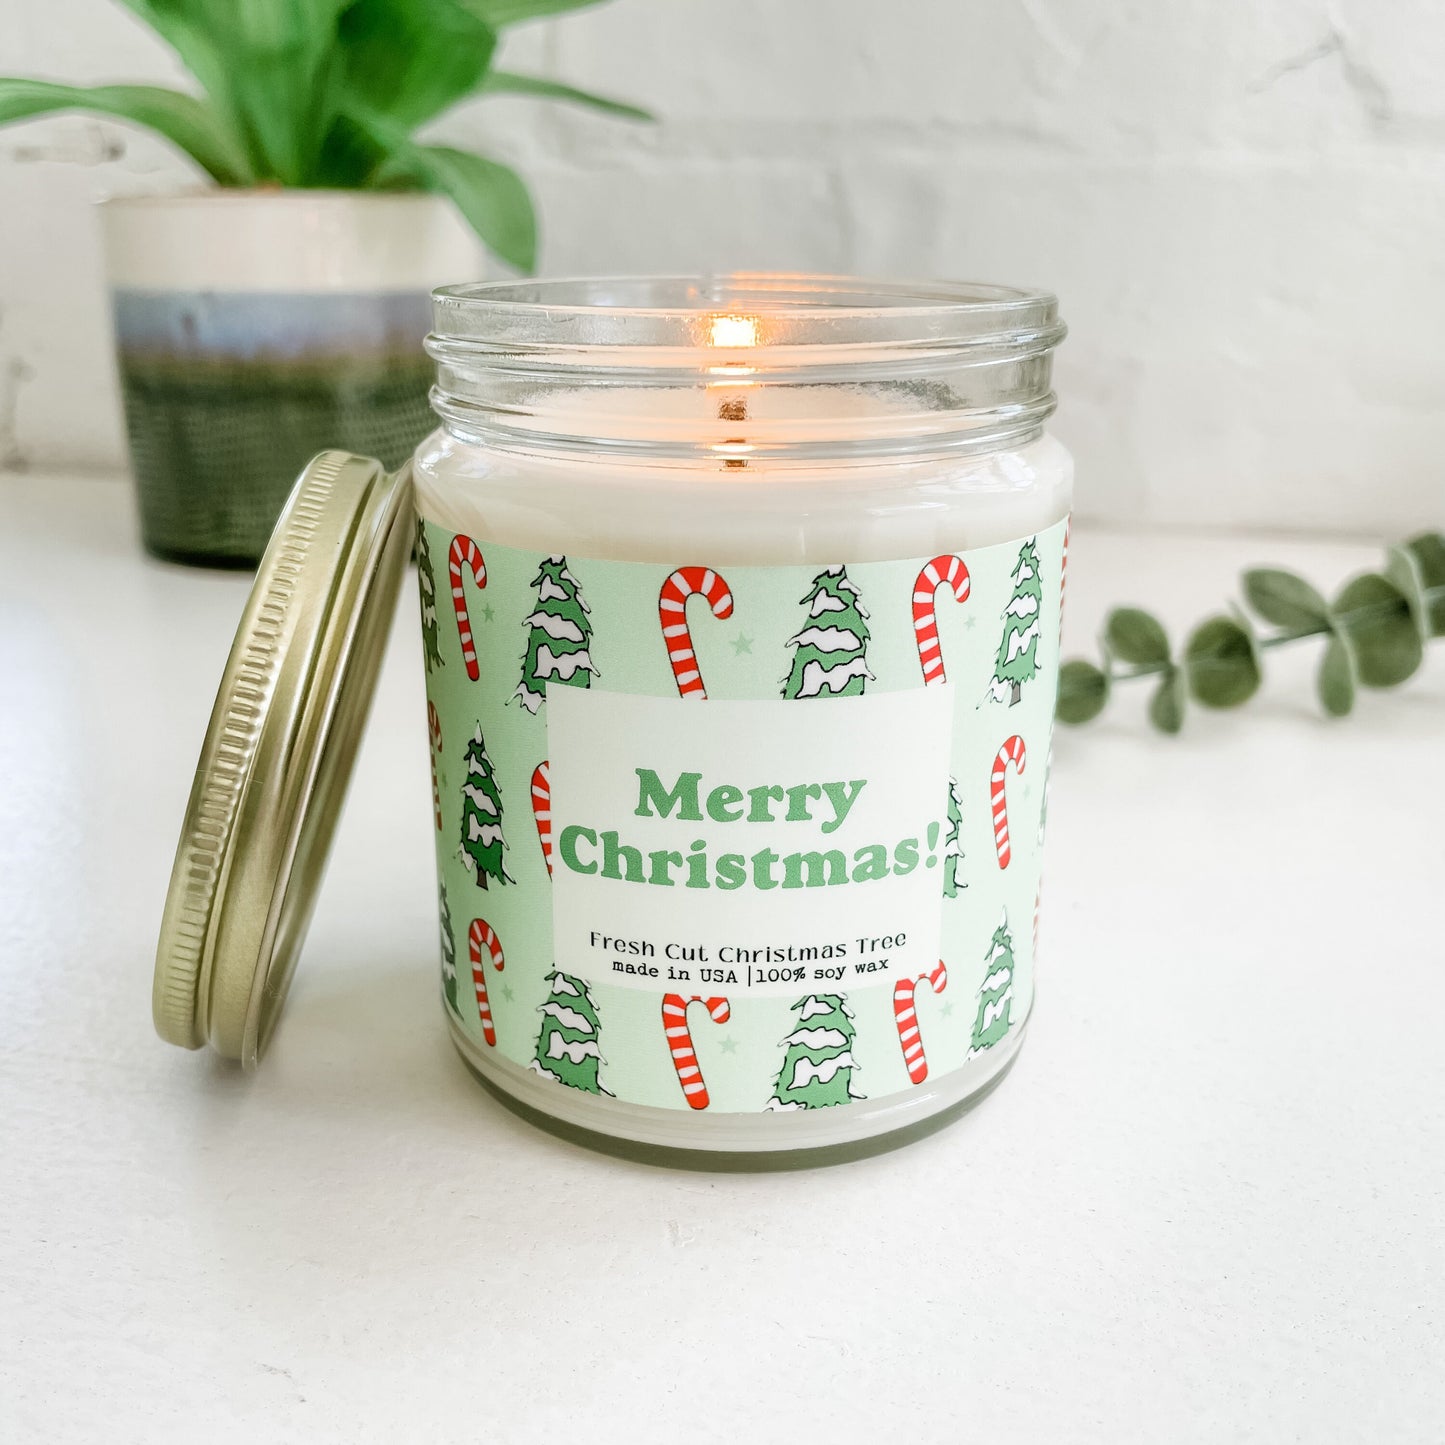 Merry Christmas - 9oz Glass Jar Soy Candle - Fresh Cut Christmas Tree Scent